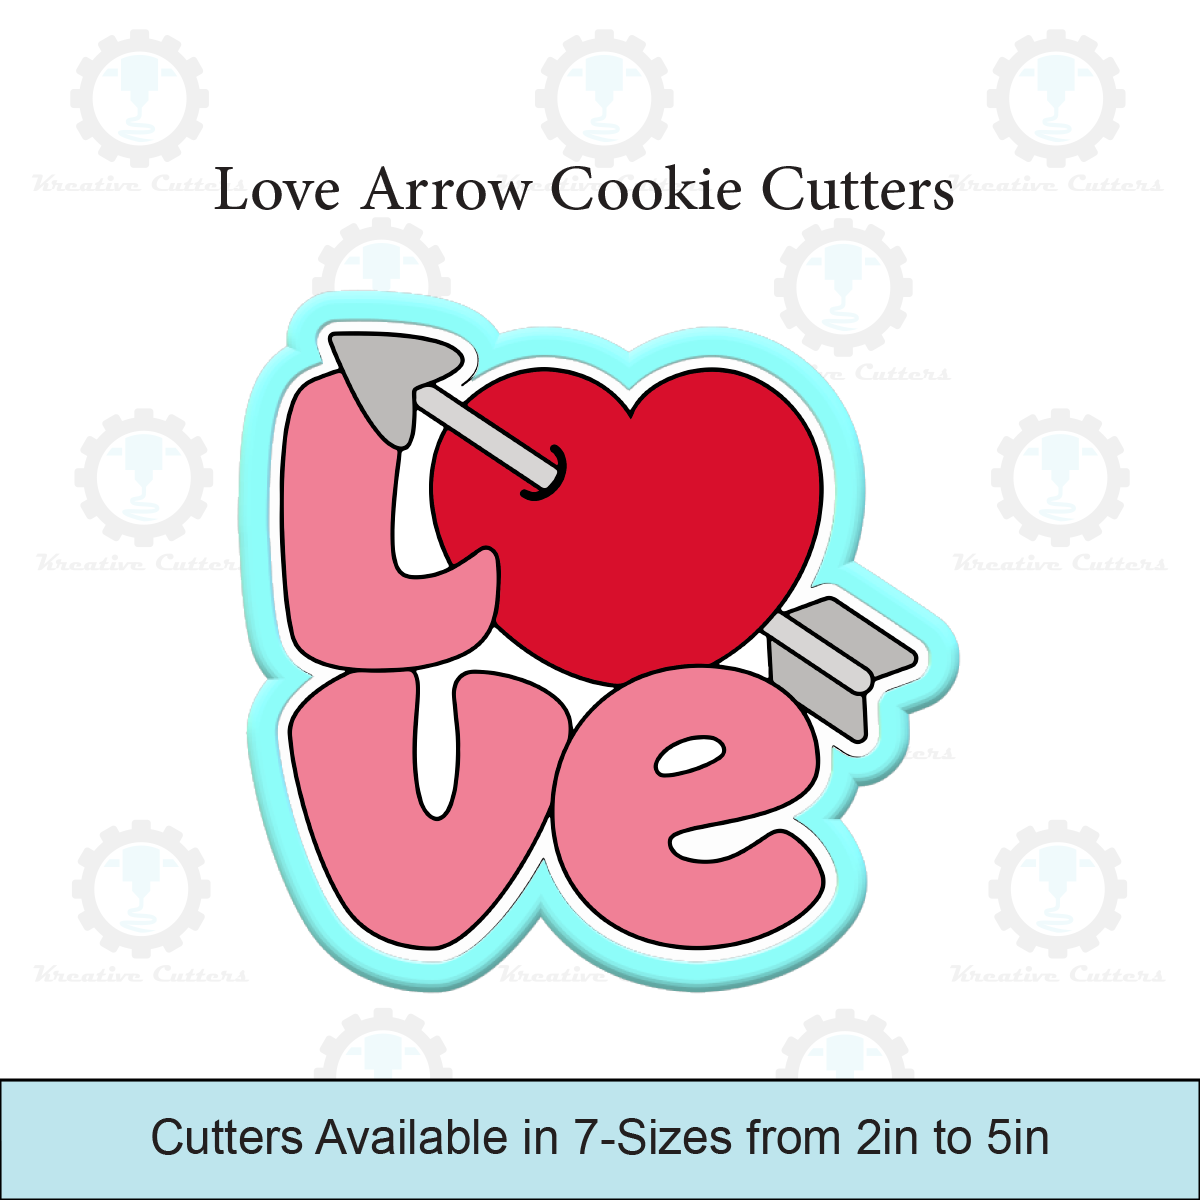 Love Arrow Cookie Cutters